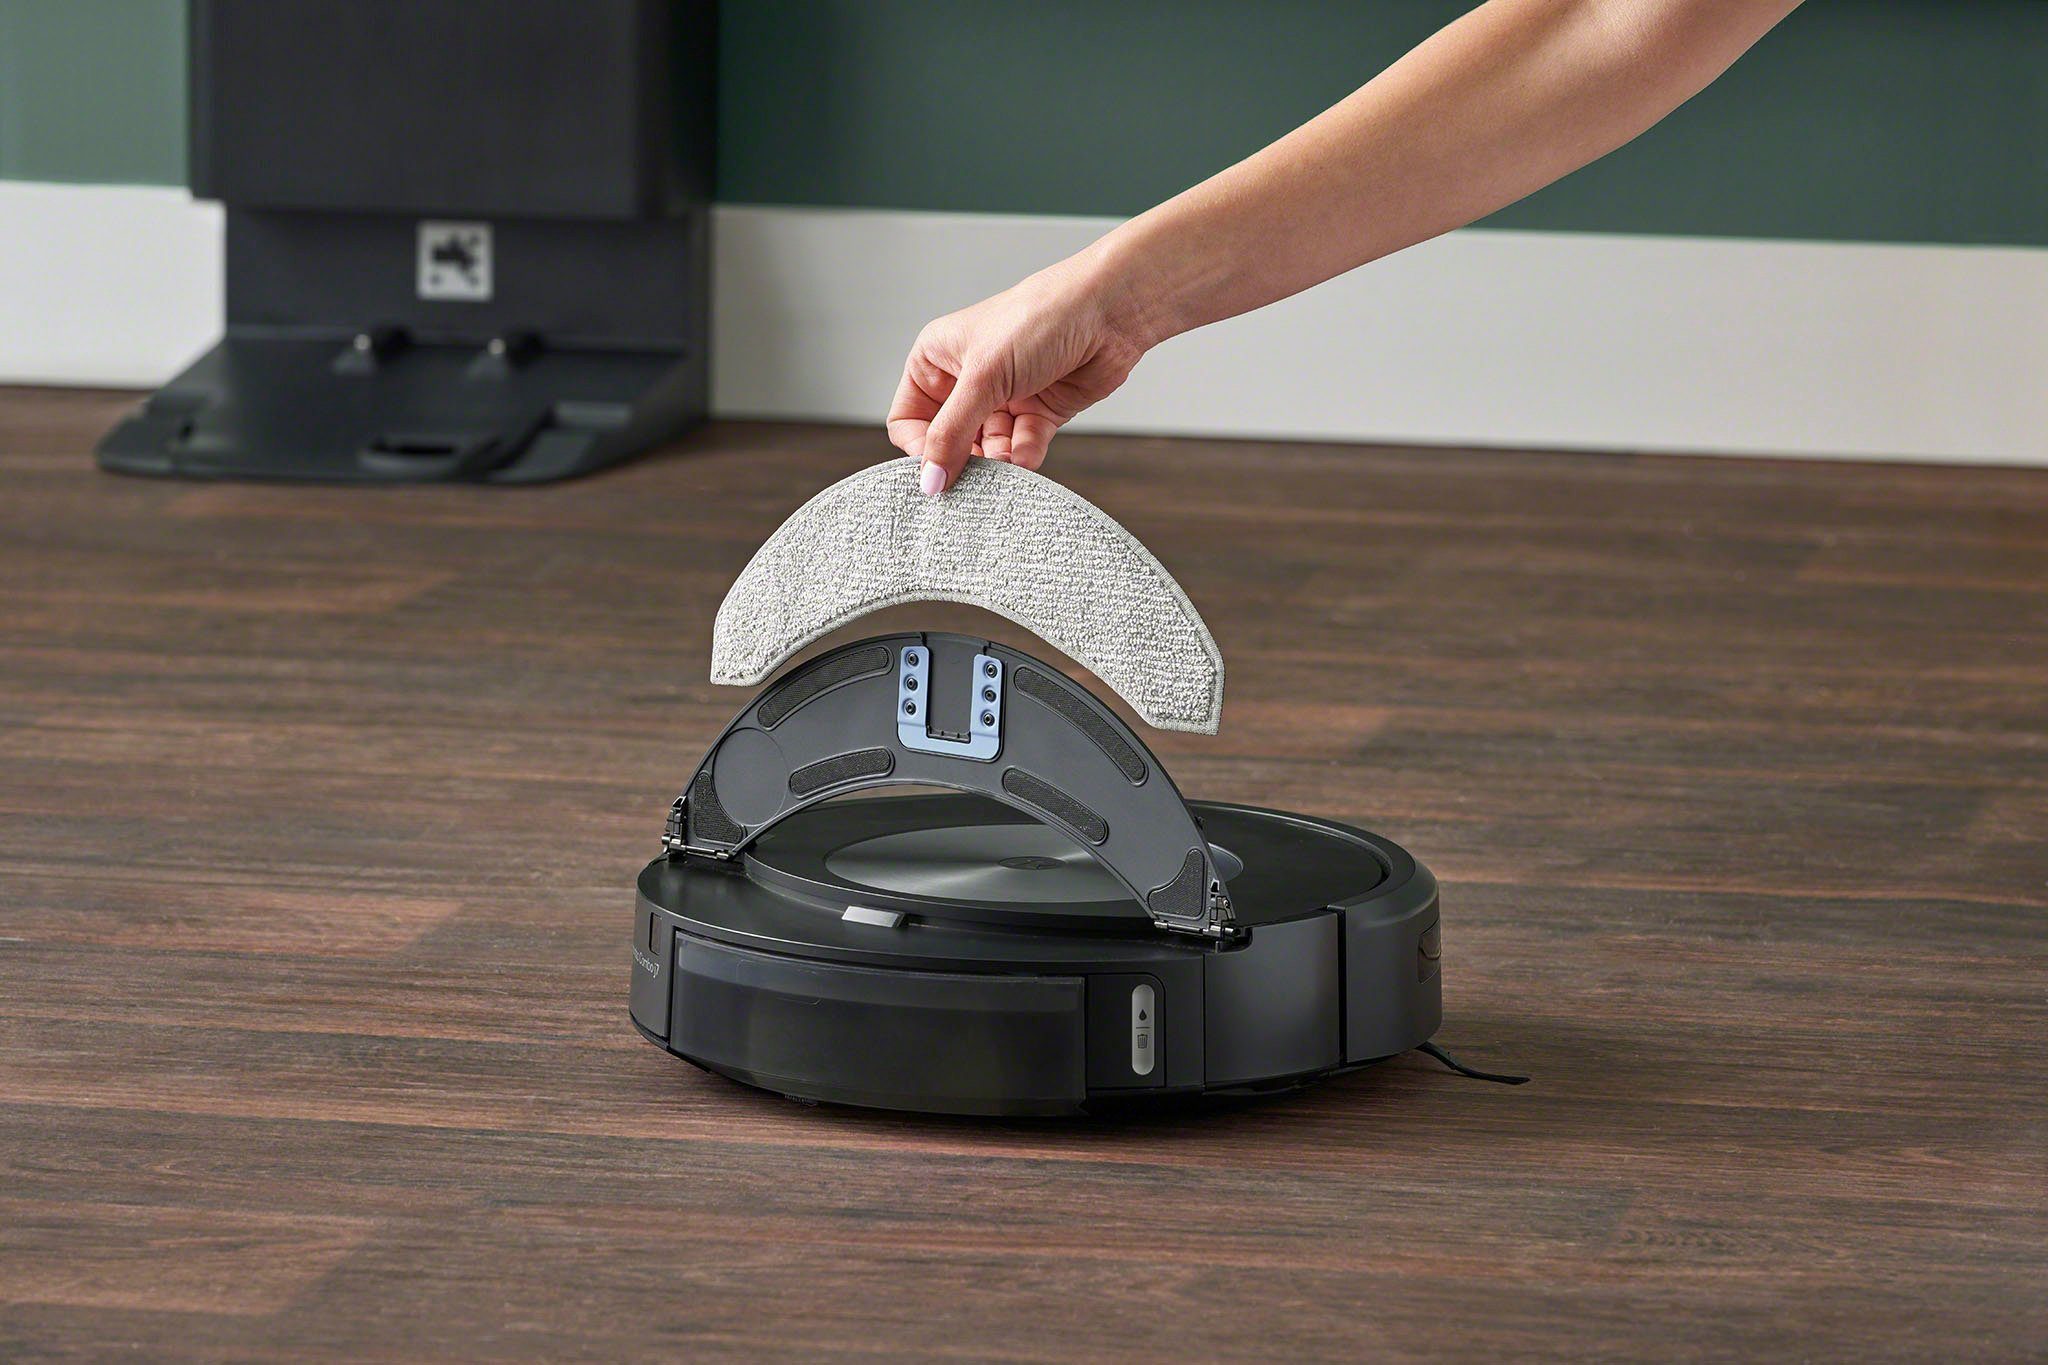 Roomba Combo iRobot (c755840) Wischroboter mit Absaugstation, und autom. Saug- j7+ Saugroboter